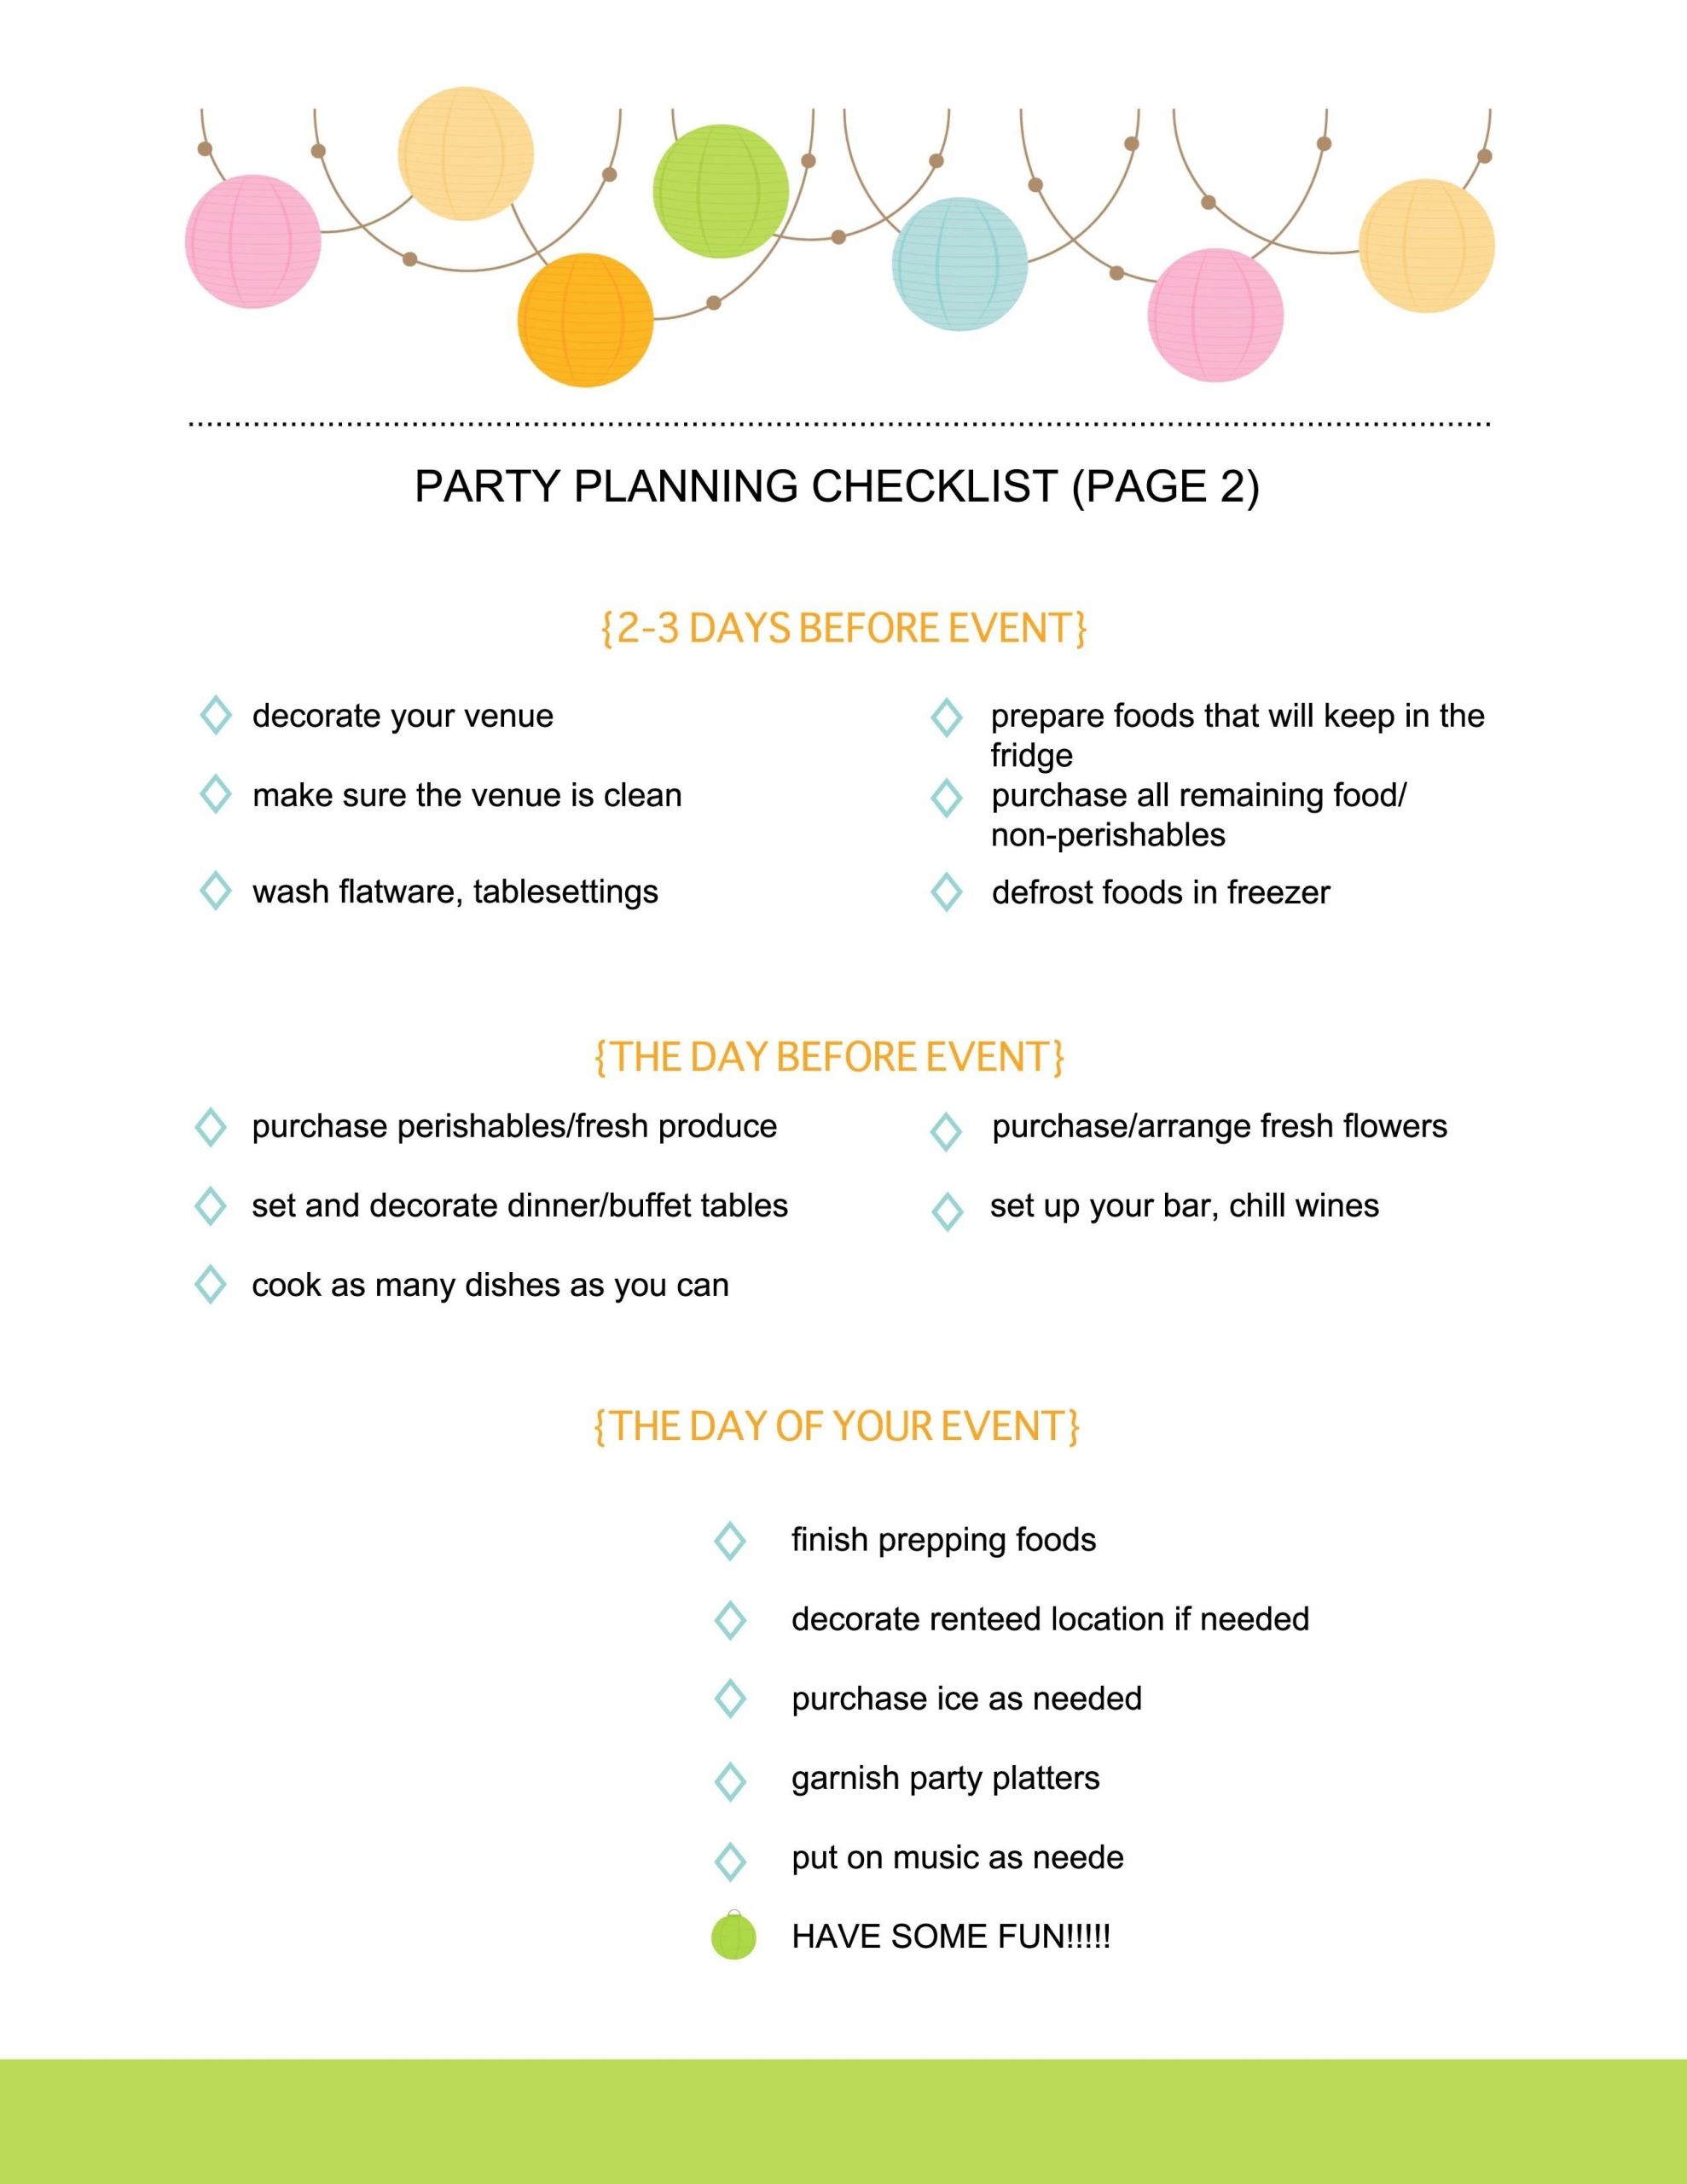 Clean Fun Bachelorette Party Ideas
 10 Best Fun Clean Bachelorette Party Ideas 2020